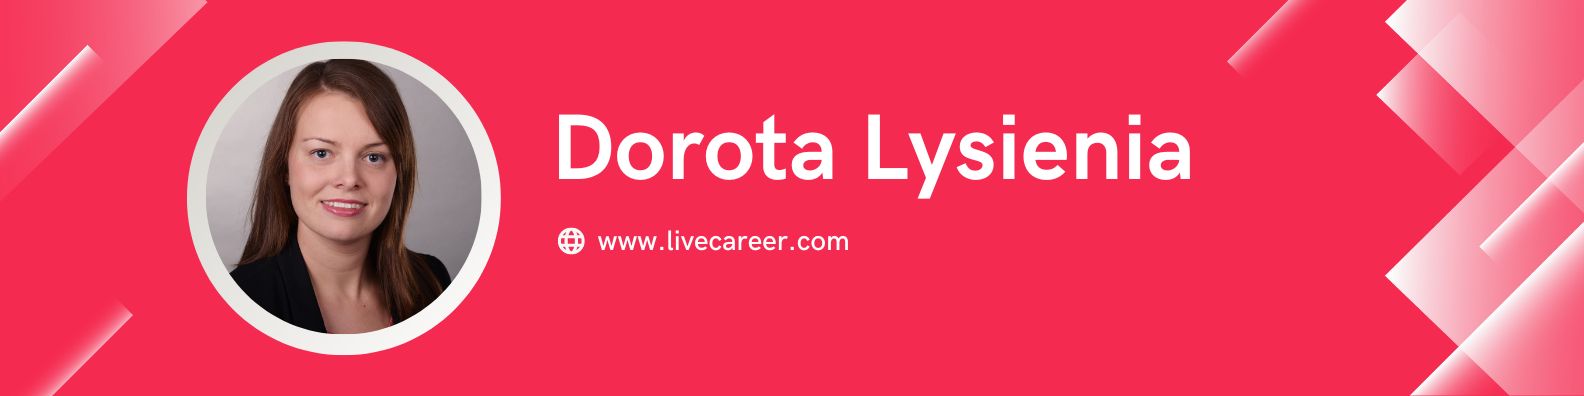 Dorota Lysienia